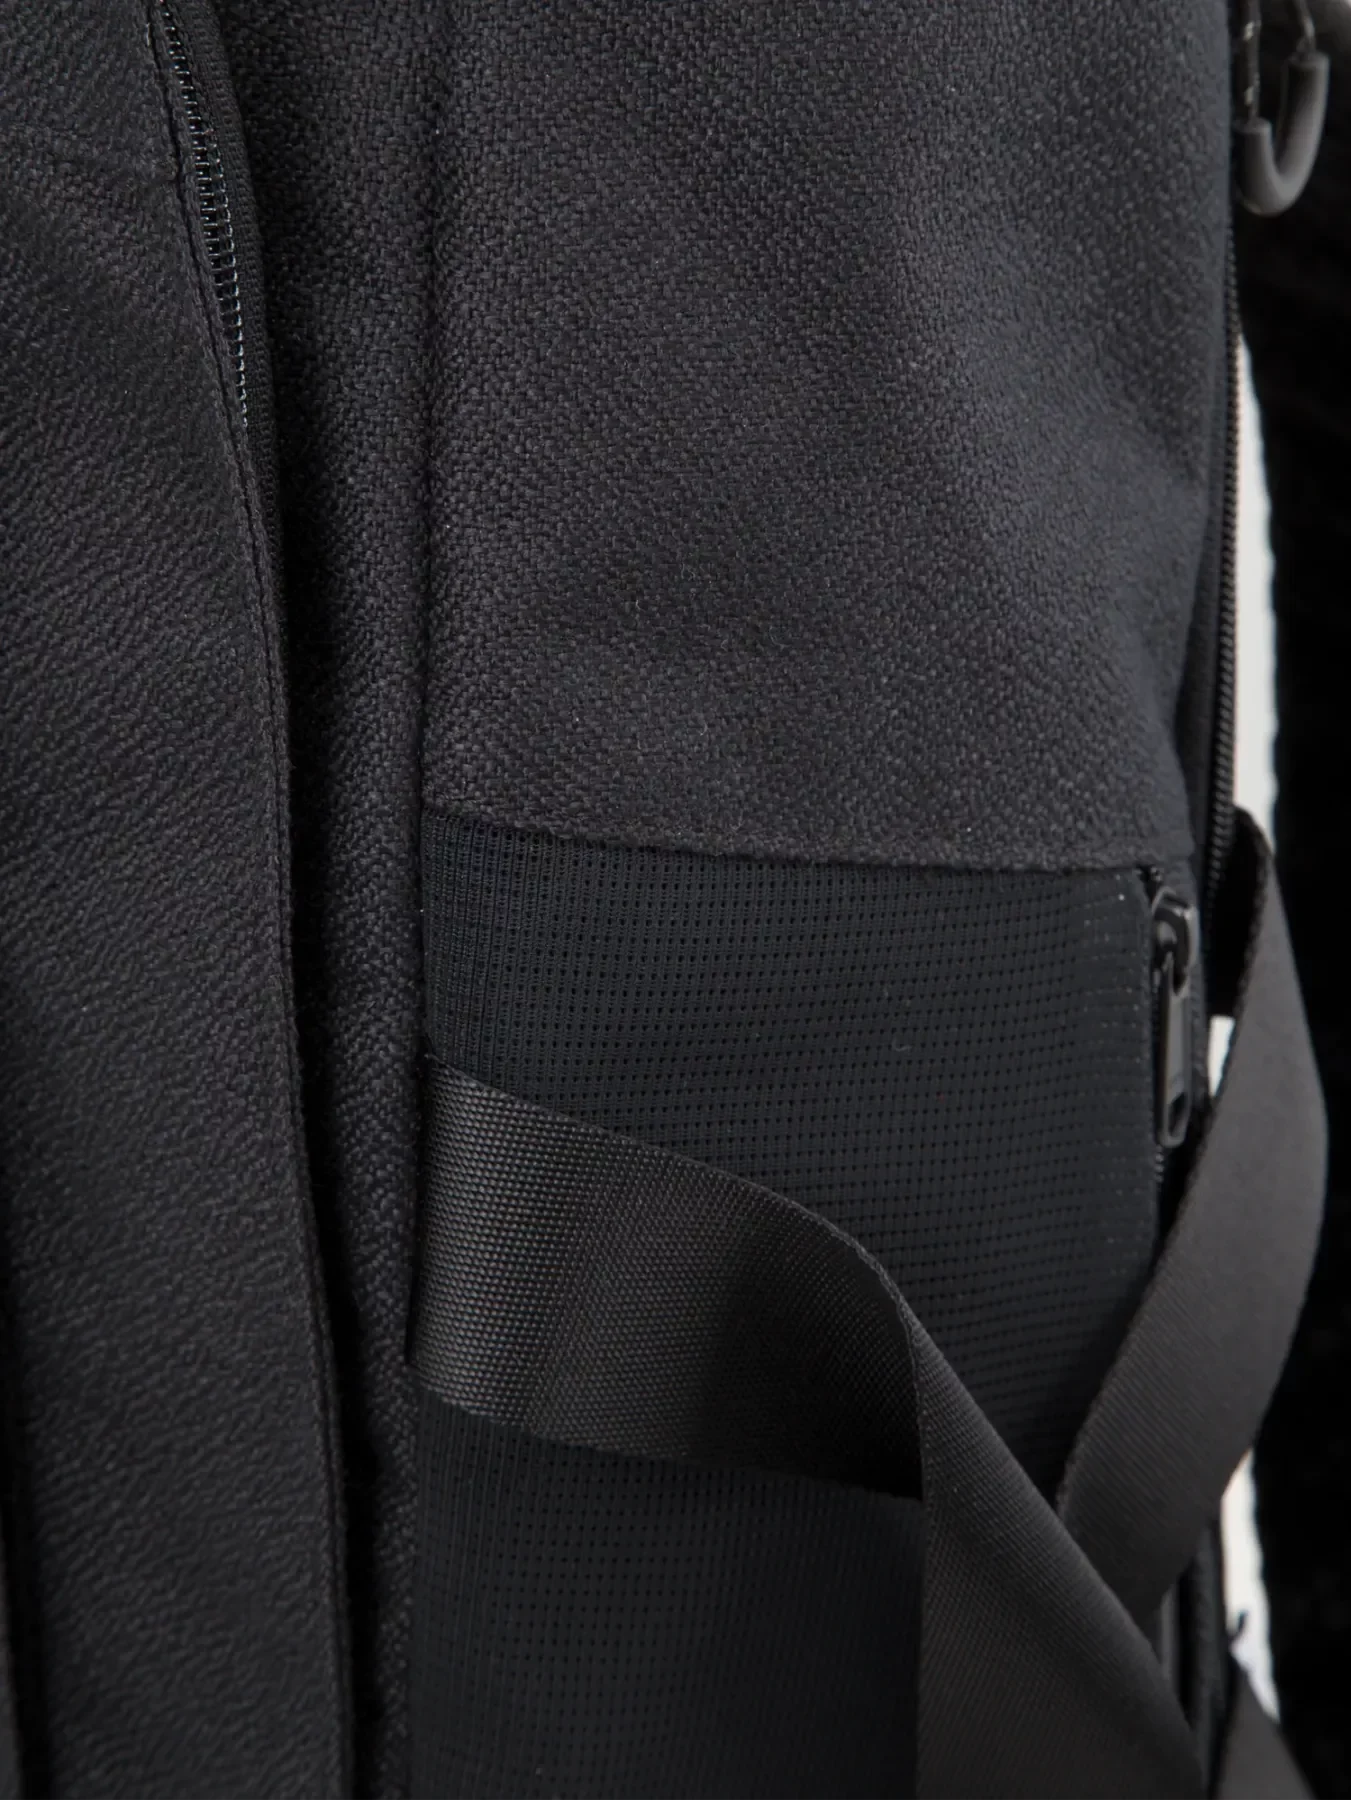 pinqponq Backpack BLOK large - Licorice Black 10